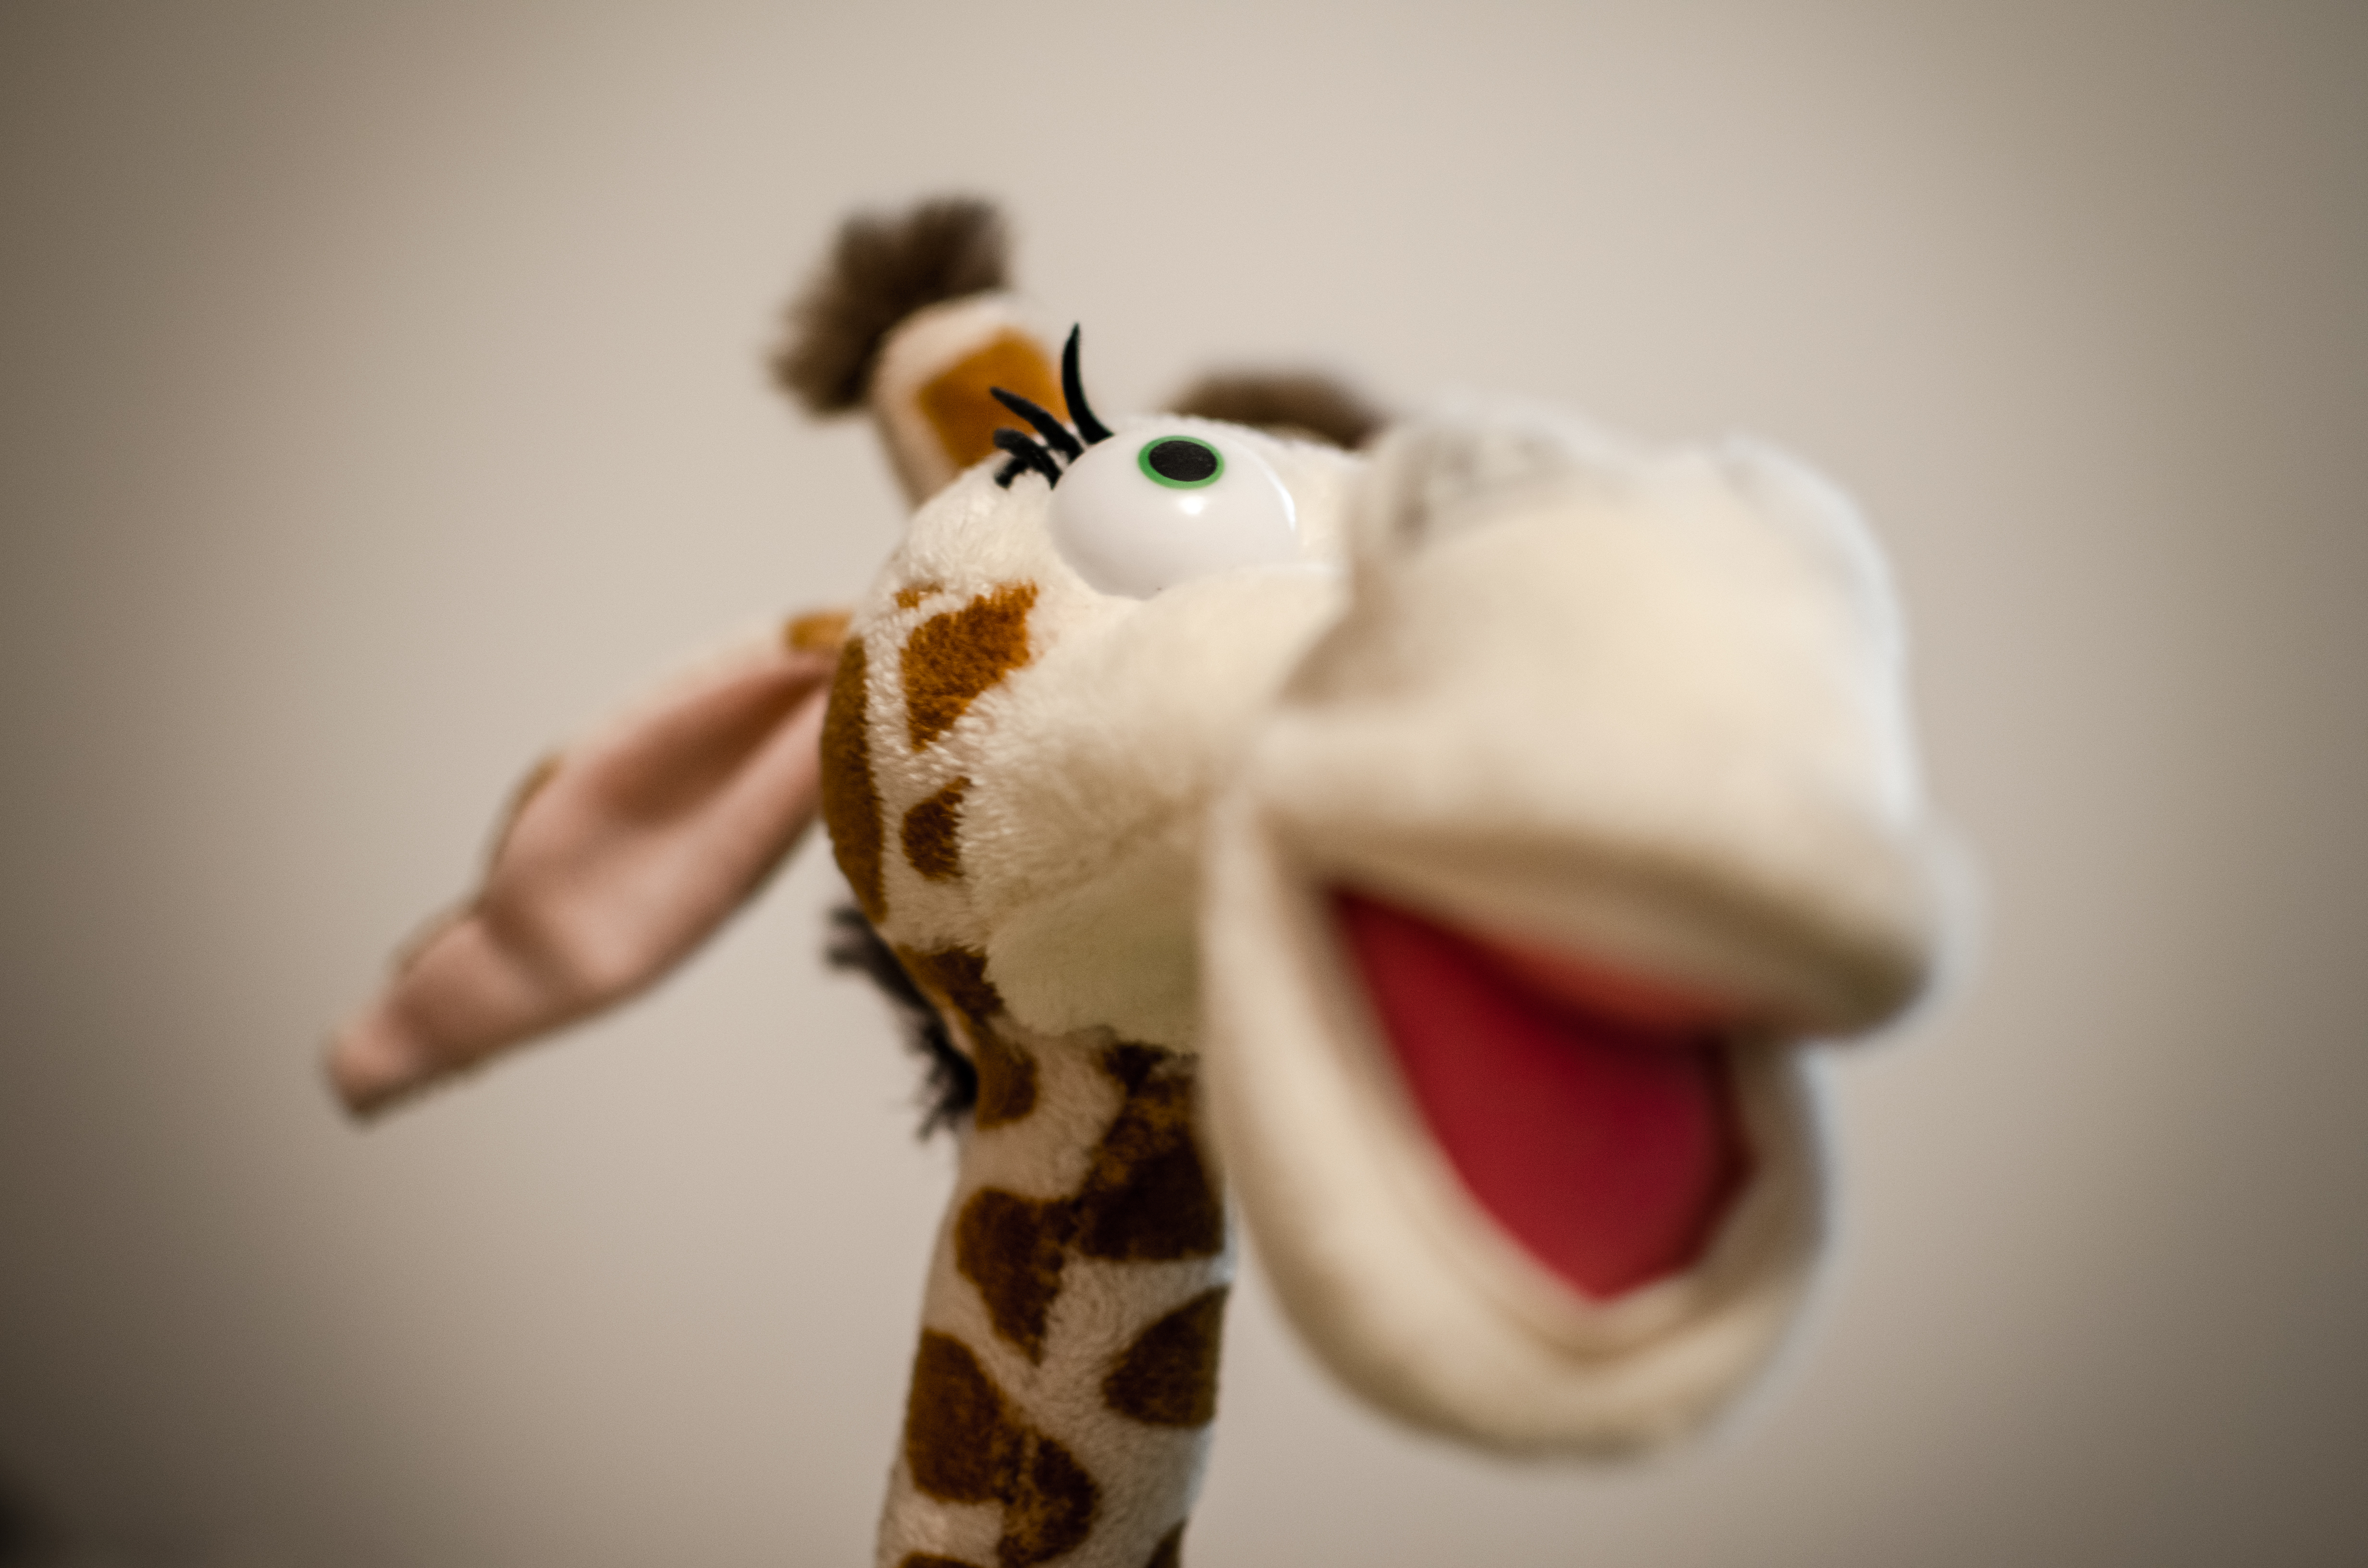 Cool giraffe toy photo